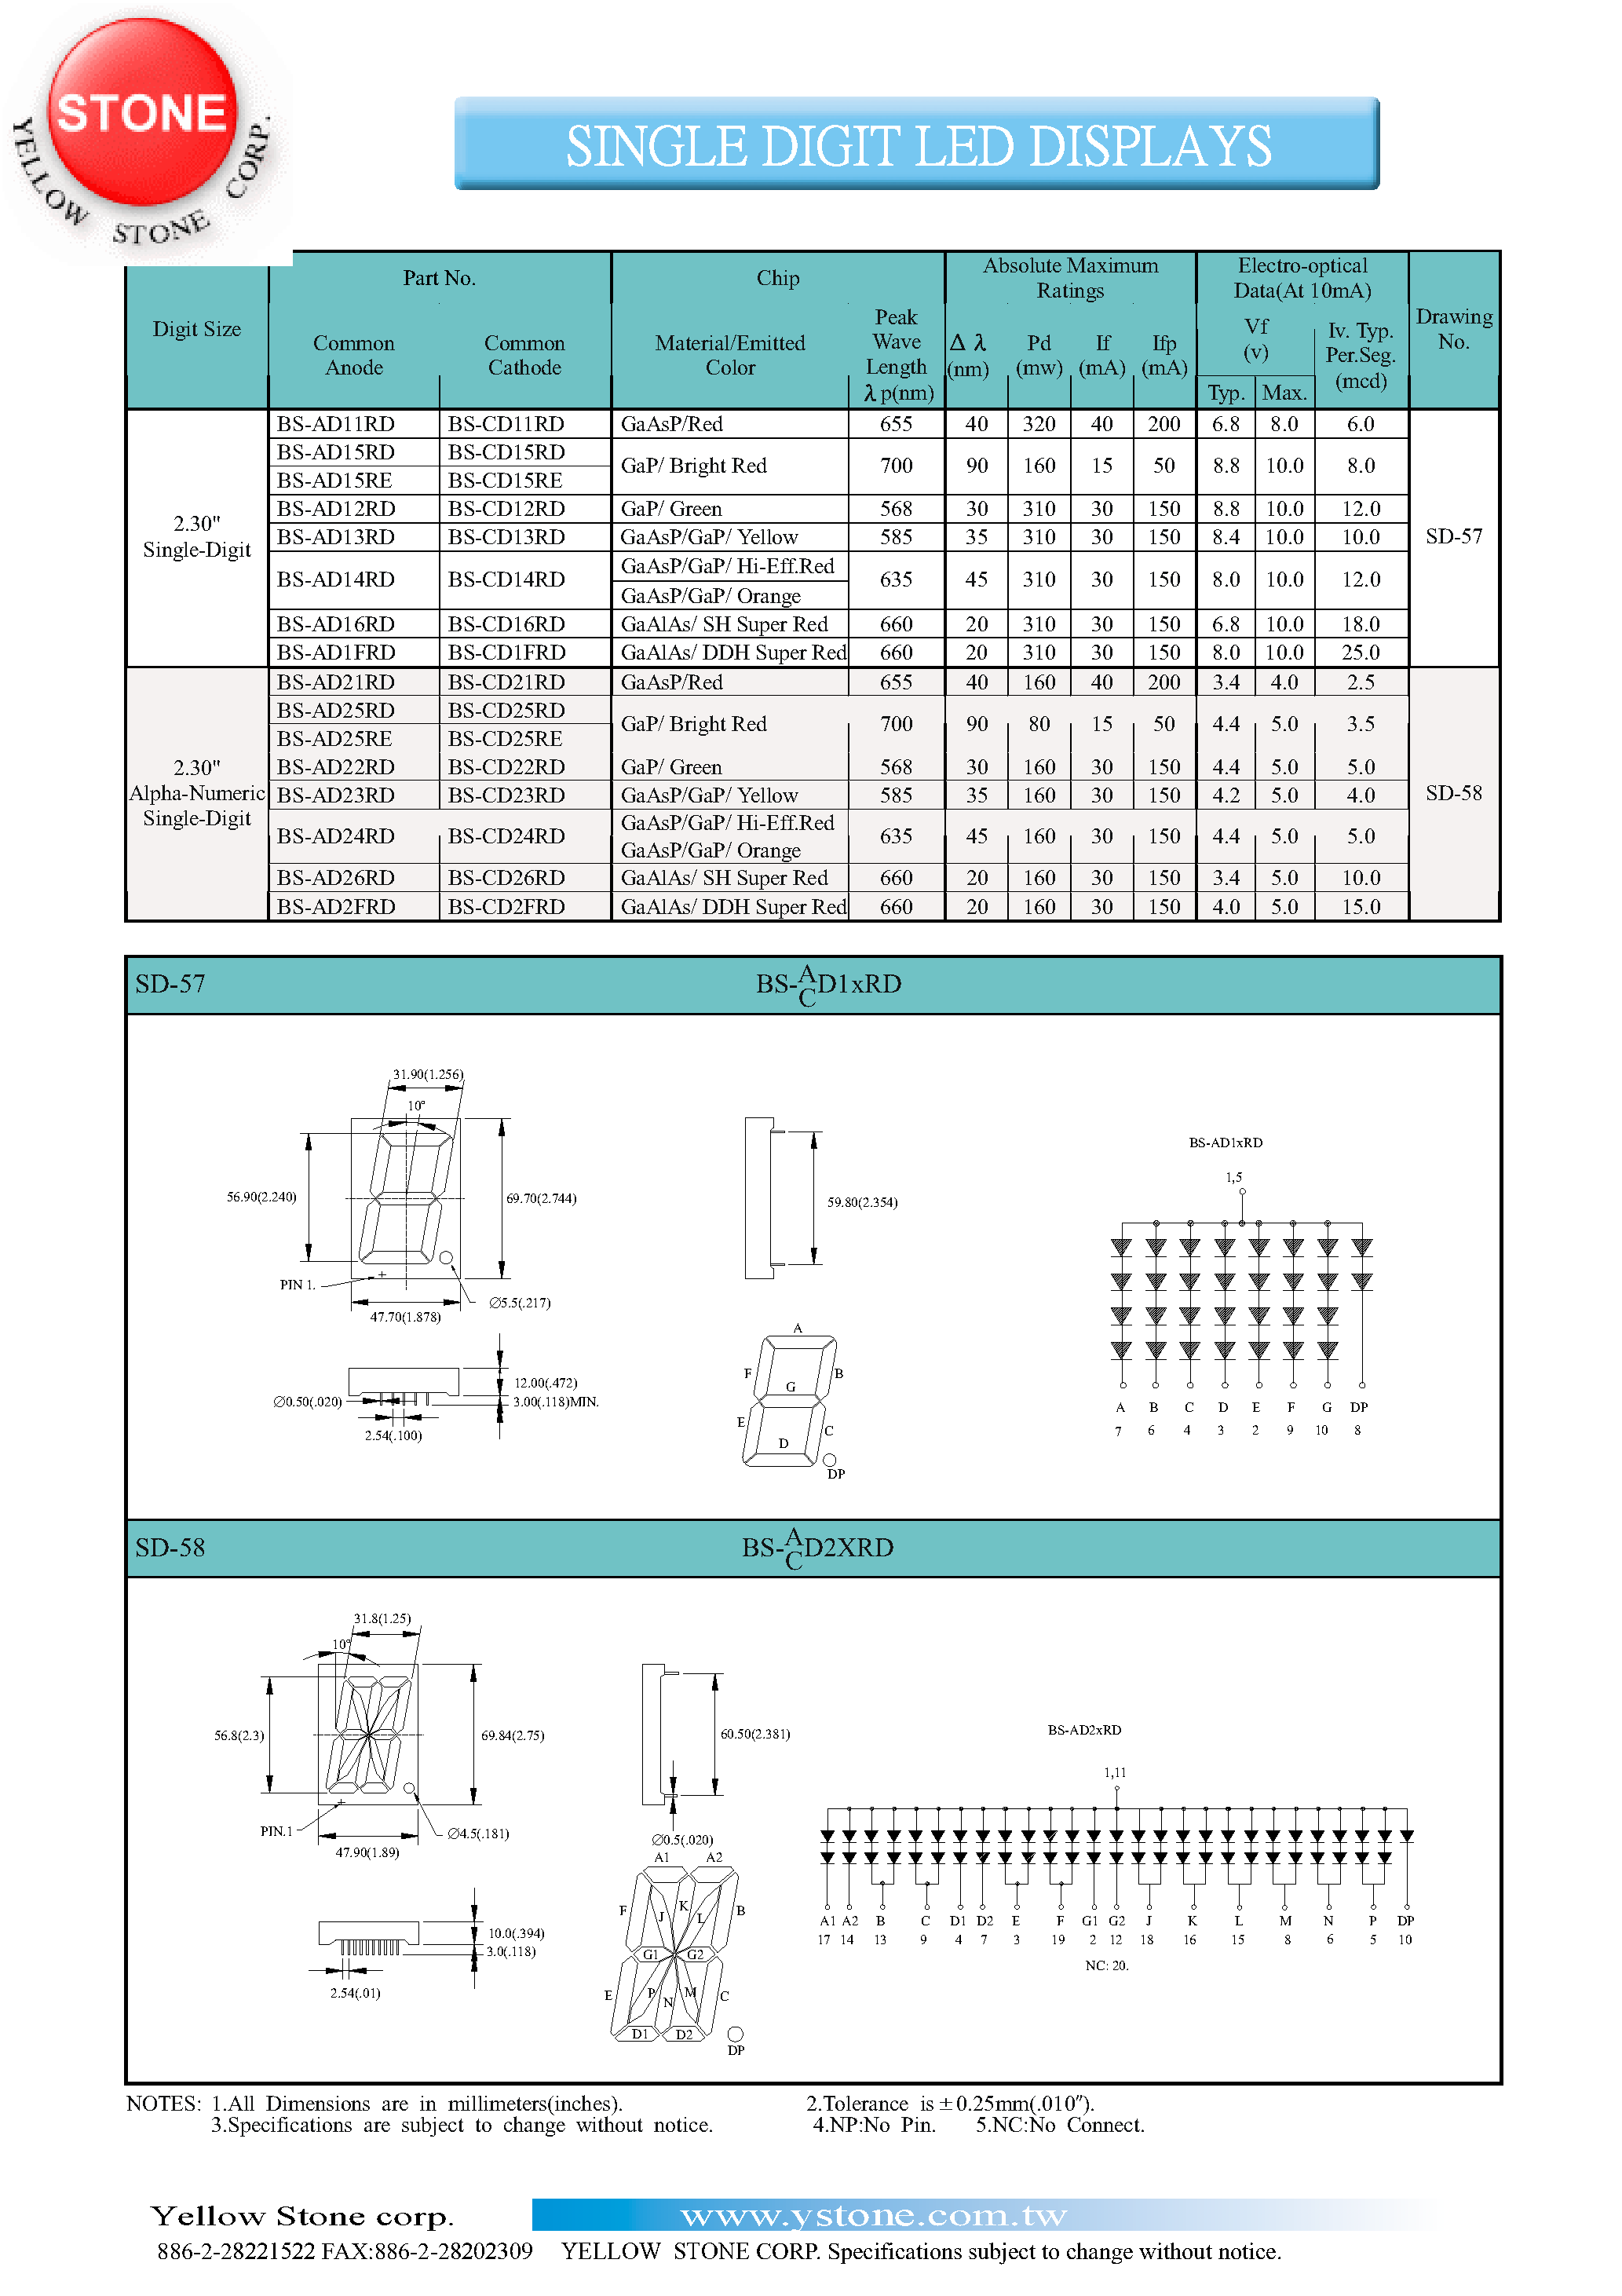 Datasheet BS-AD24RD - SINGLE DIGIT LED DISPLAYS page 1